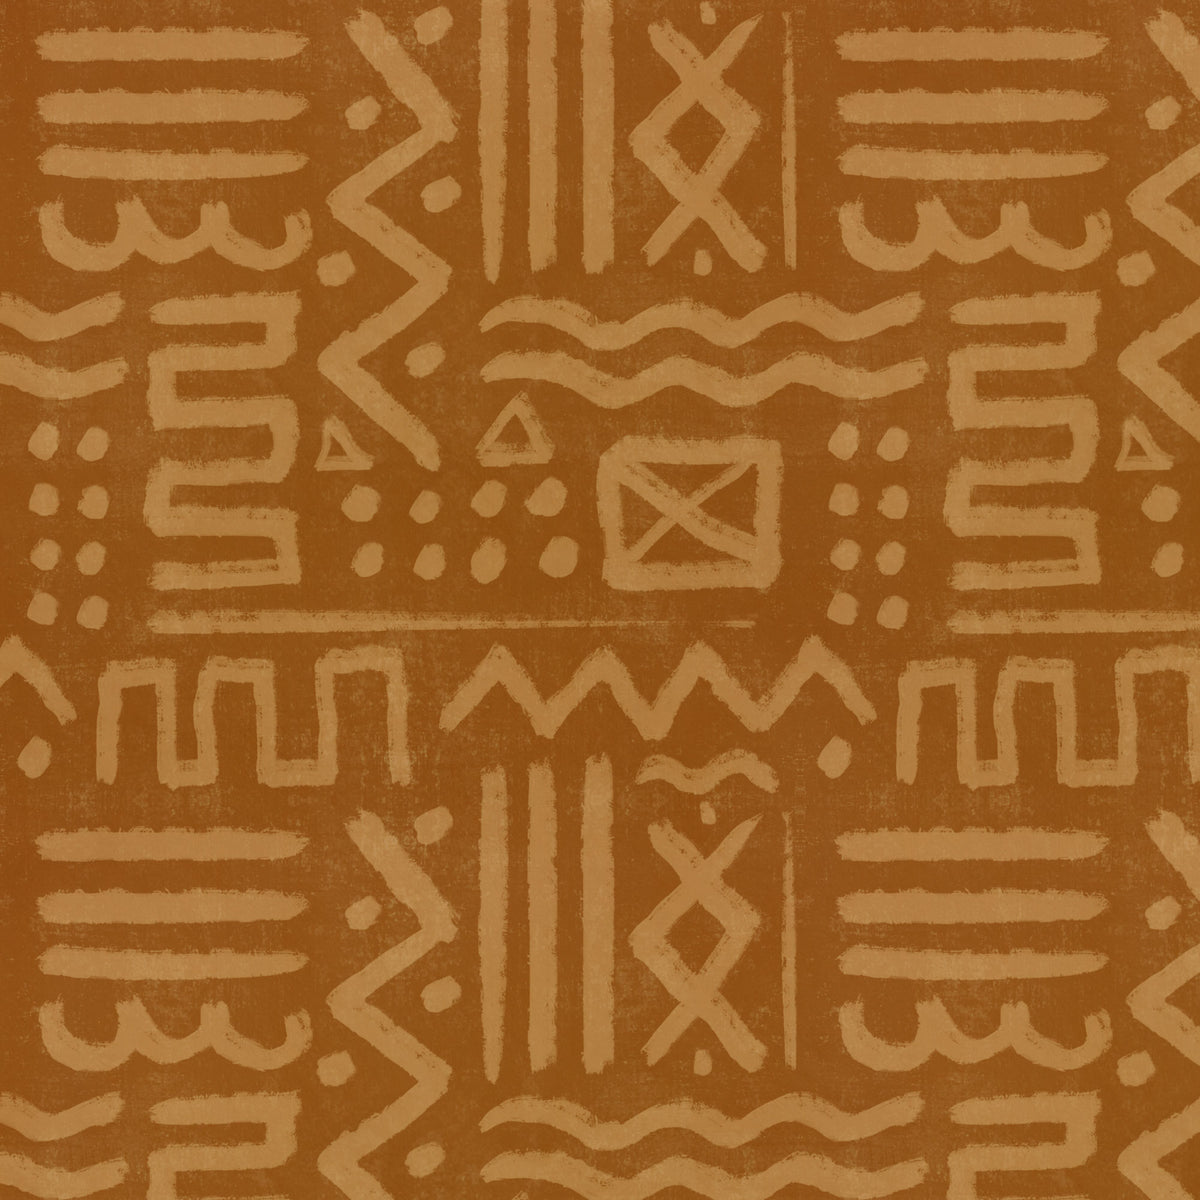 Tribal Pattern | Boho Chic Ferns